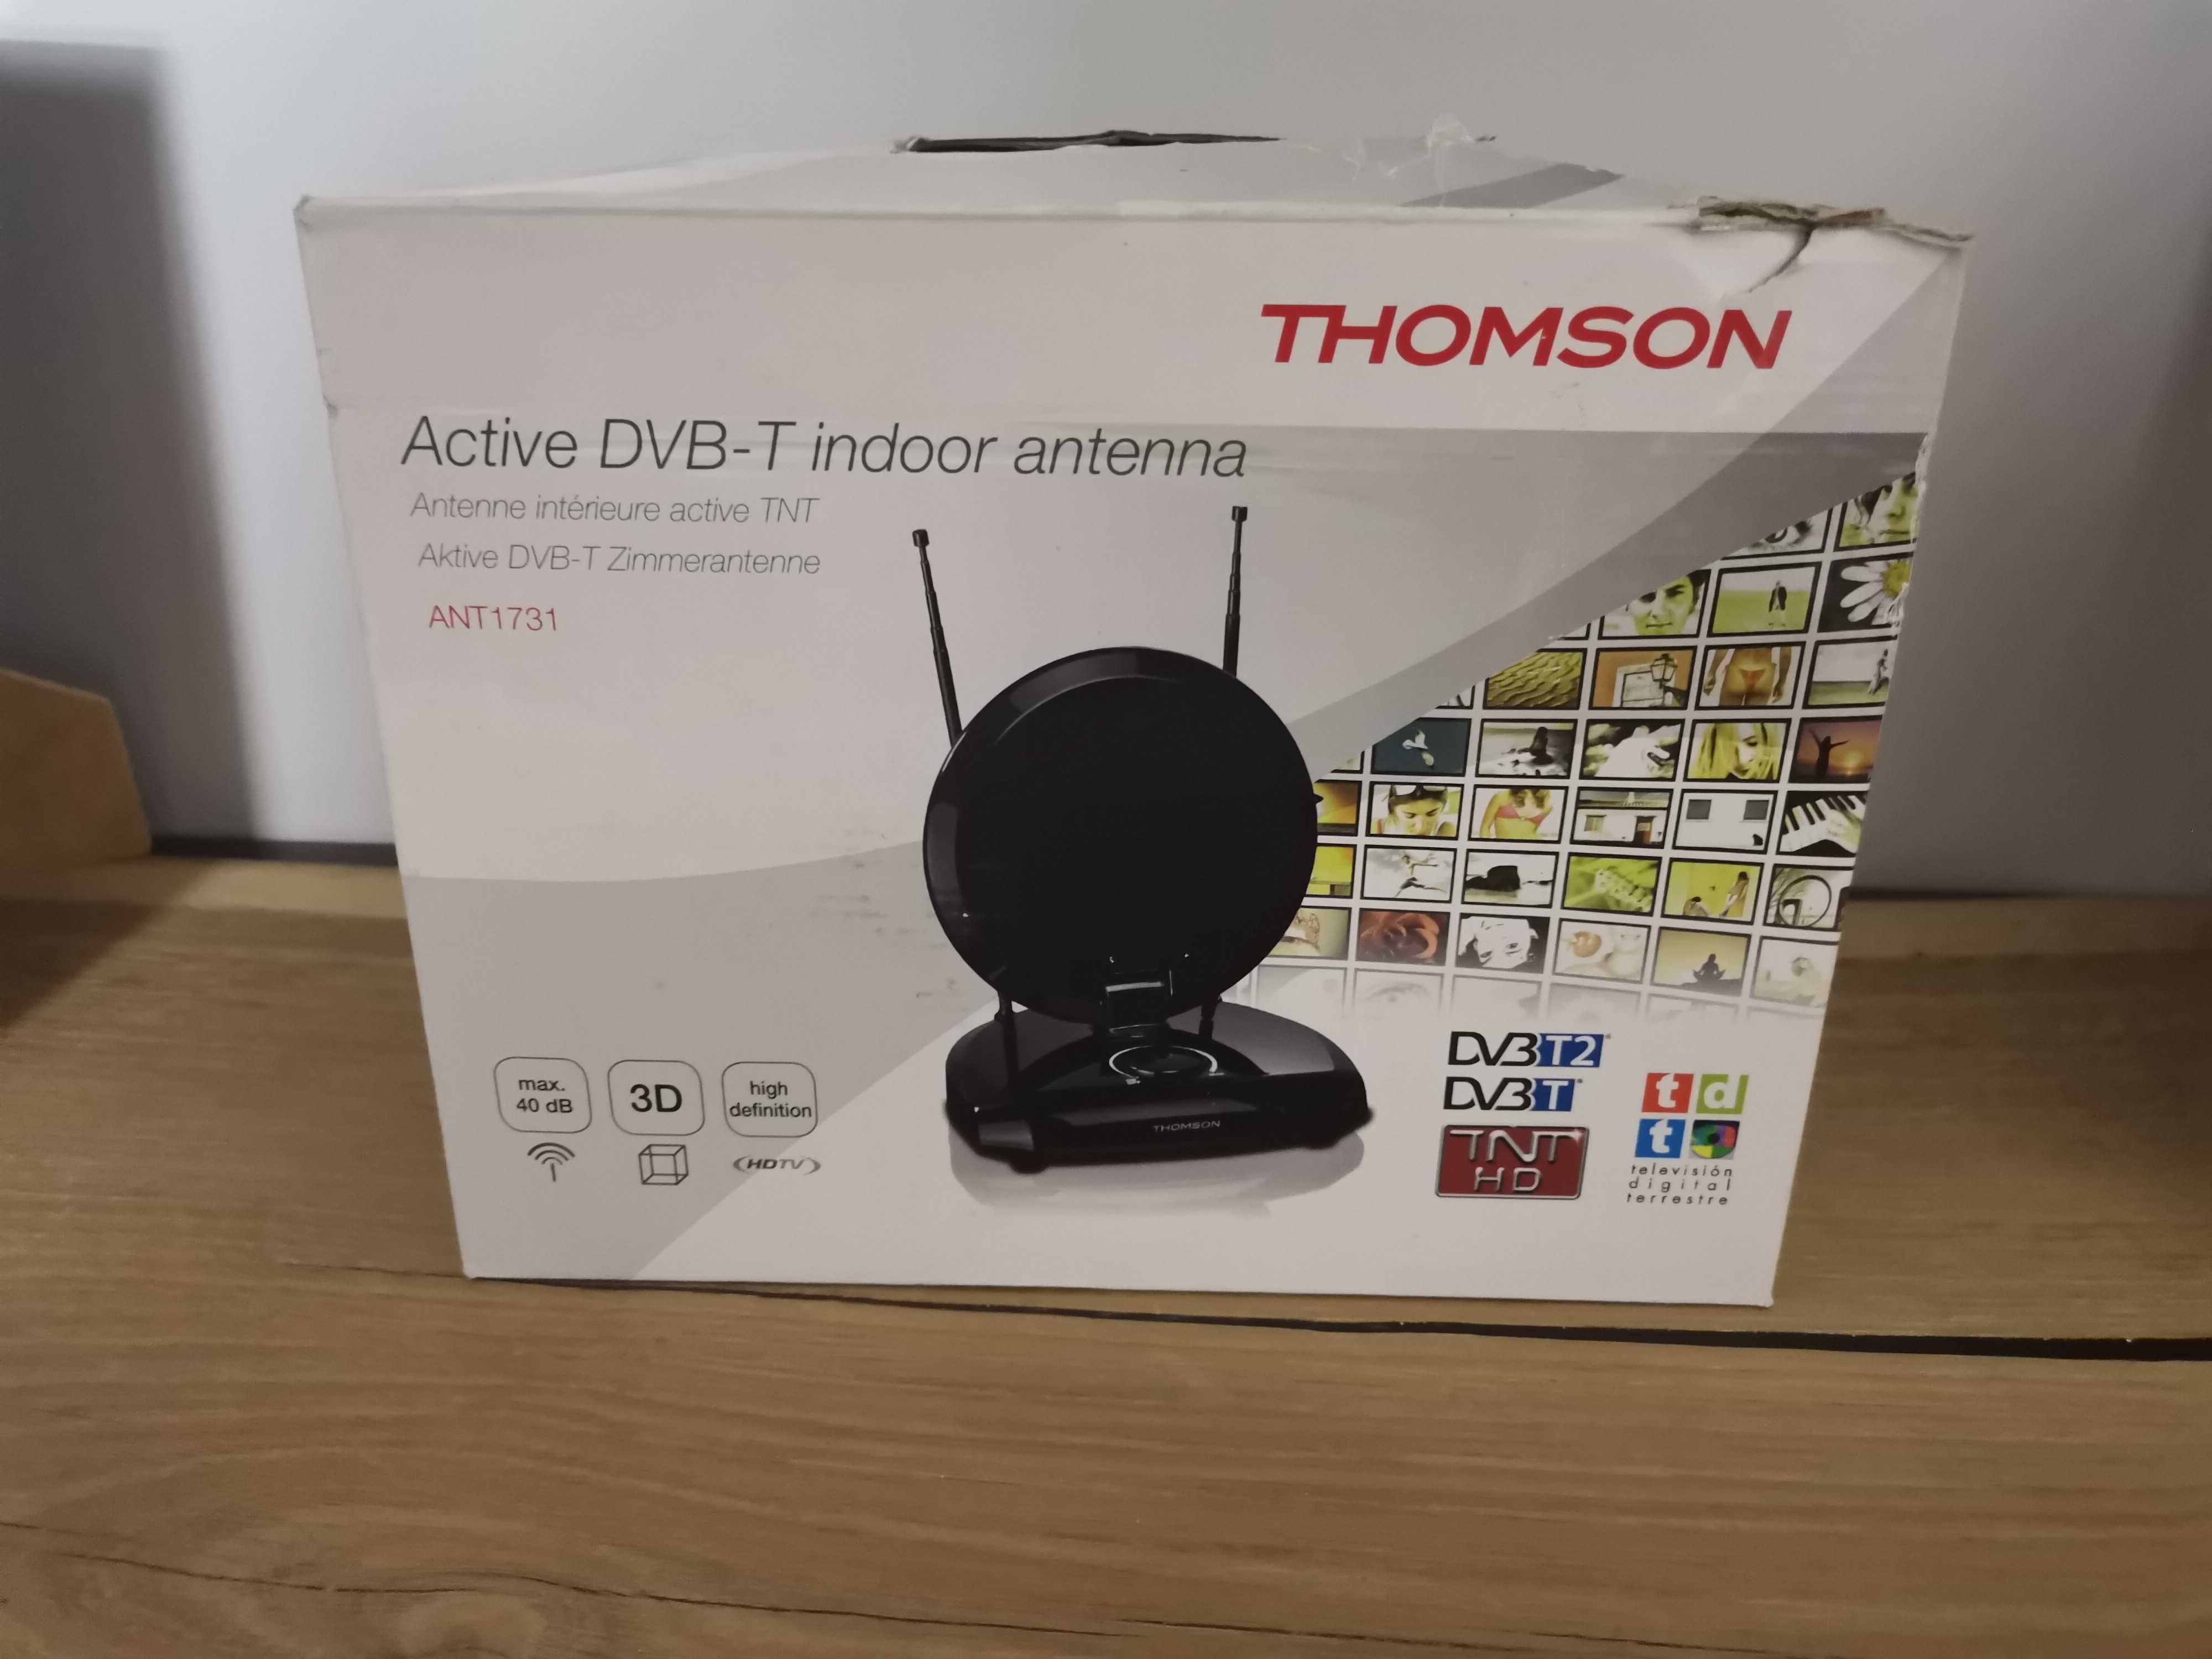 Thomson DVB-T ANT1731